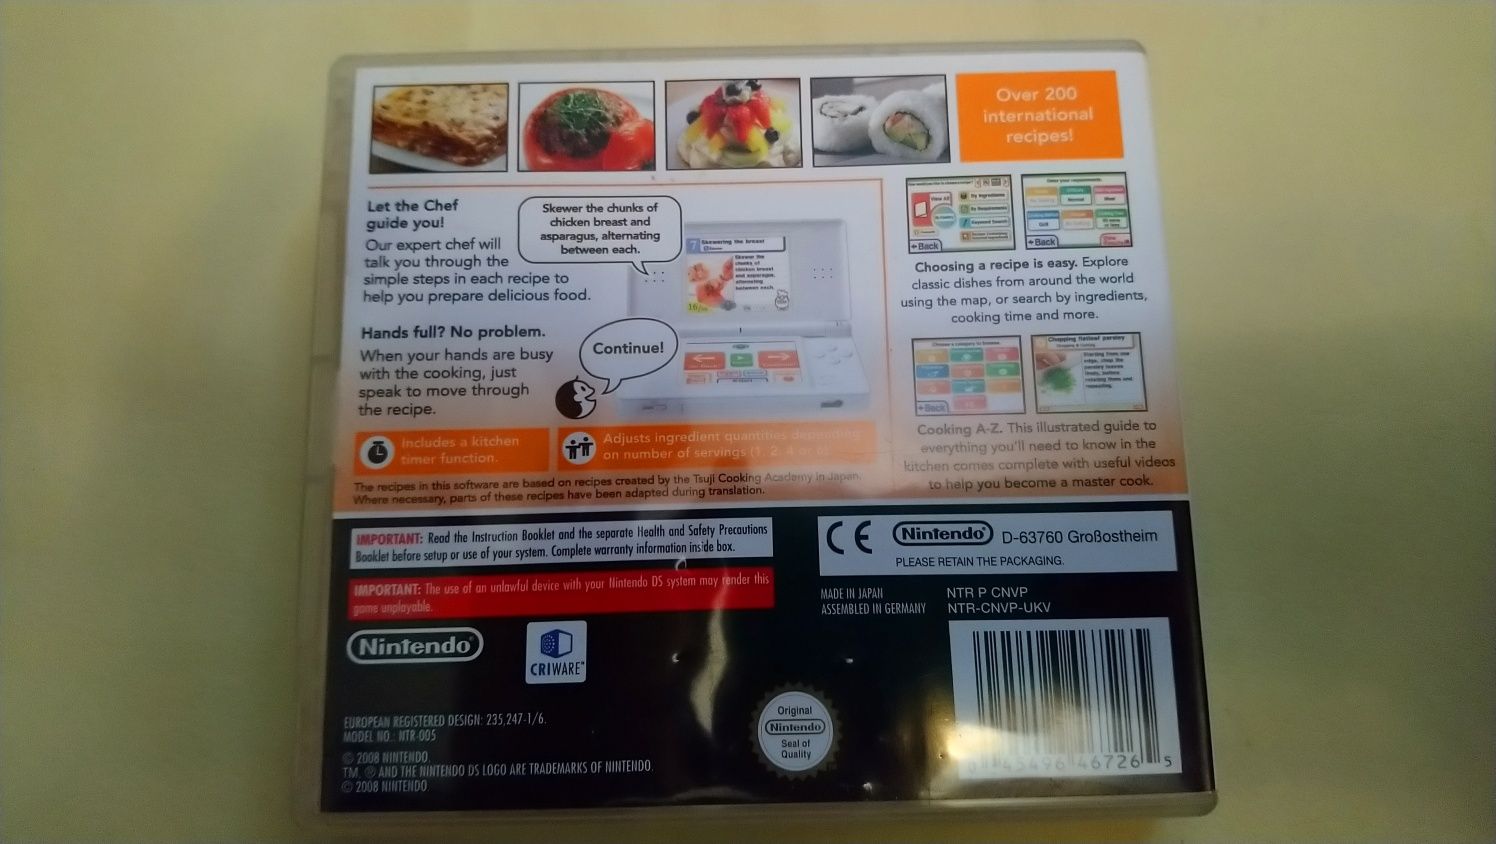 Nintendo DS Coocing Guide